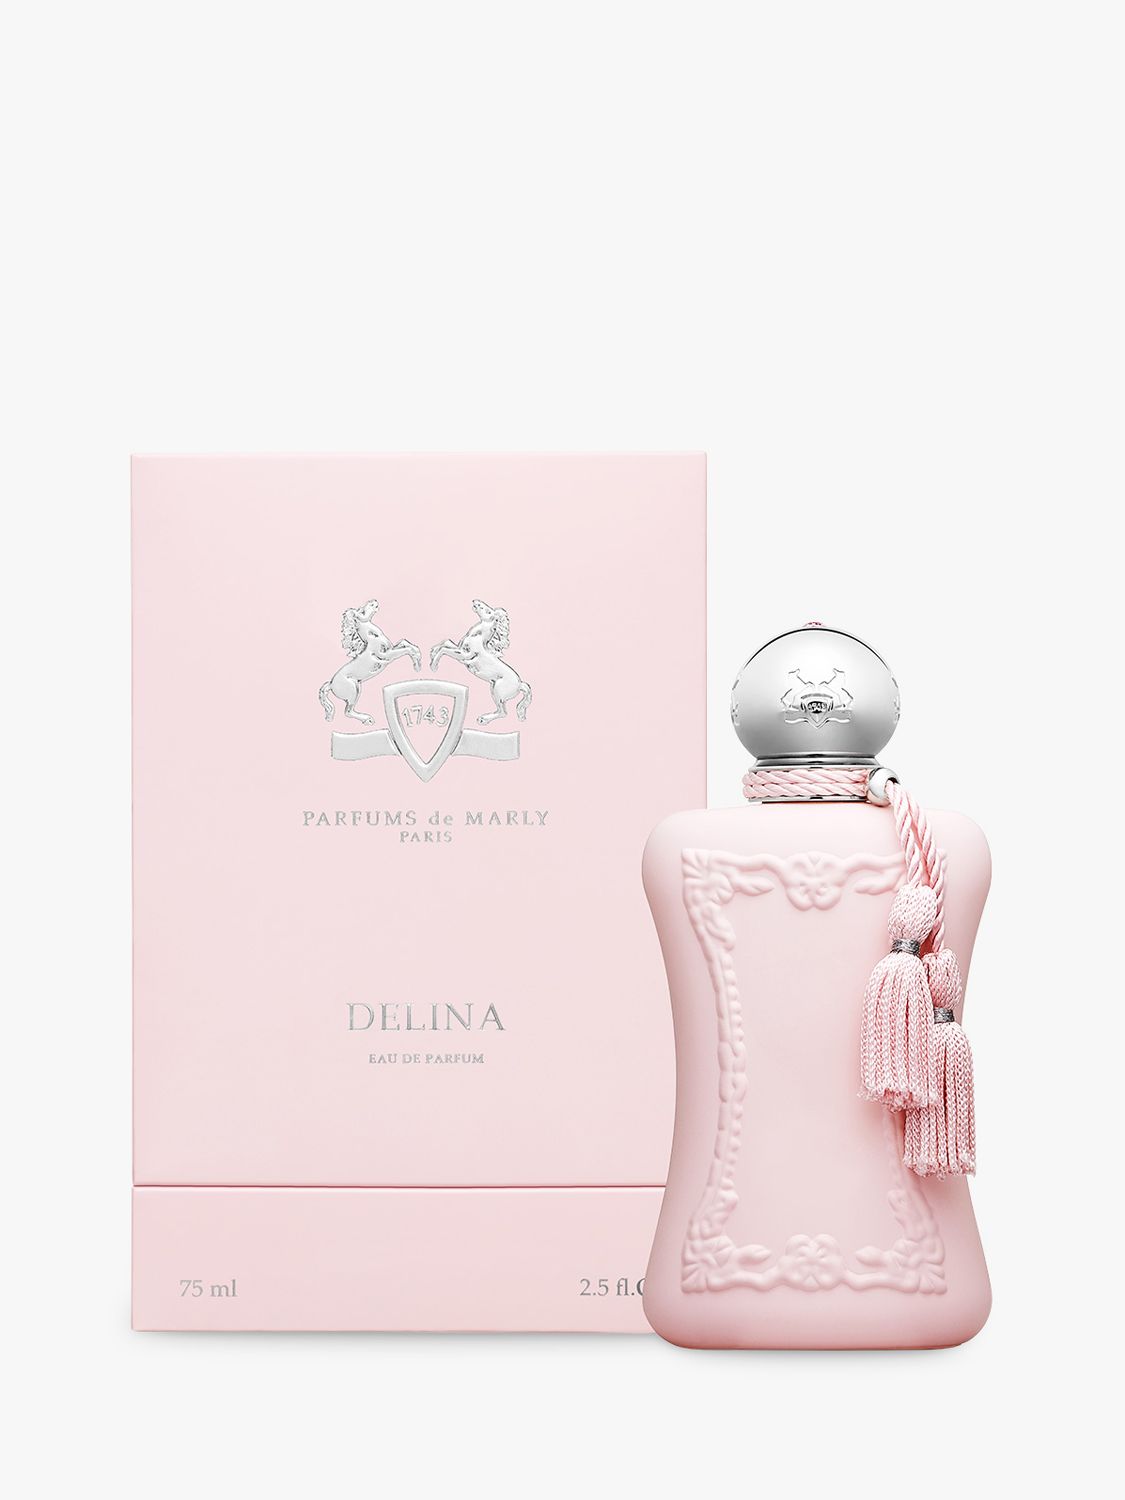 Parfums de Marly Delina Eau de Parfum, 75ml